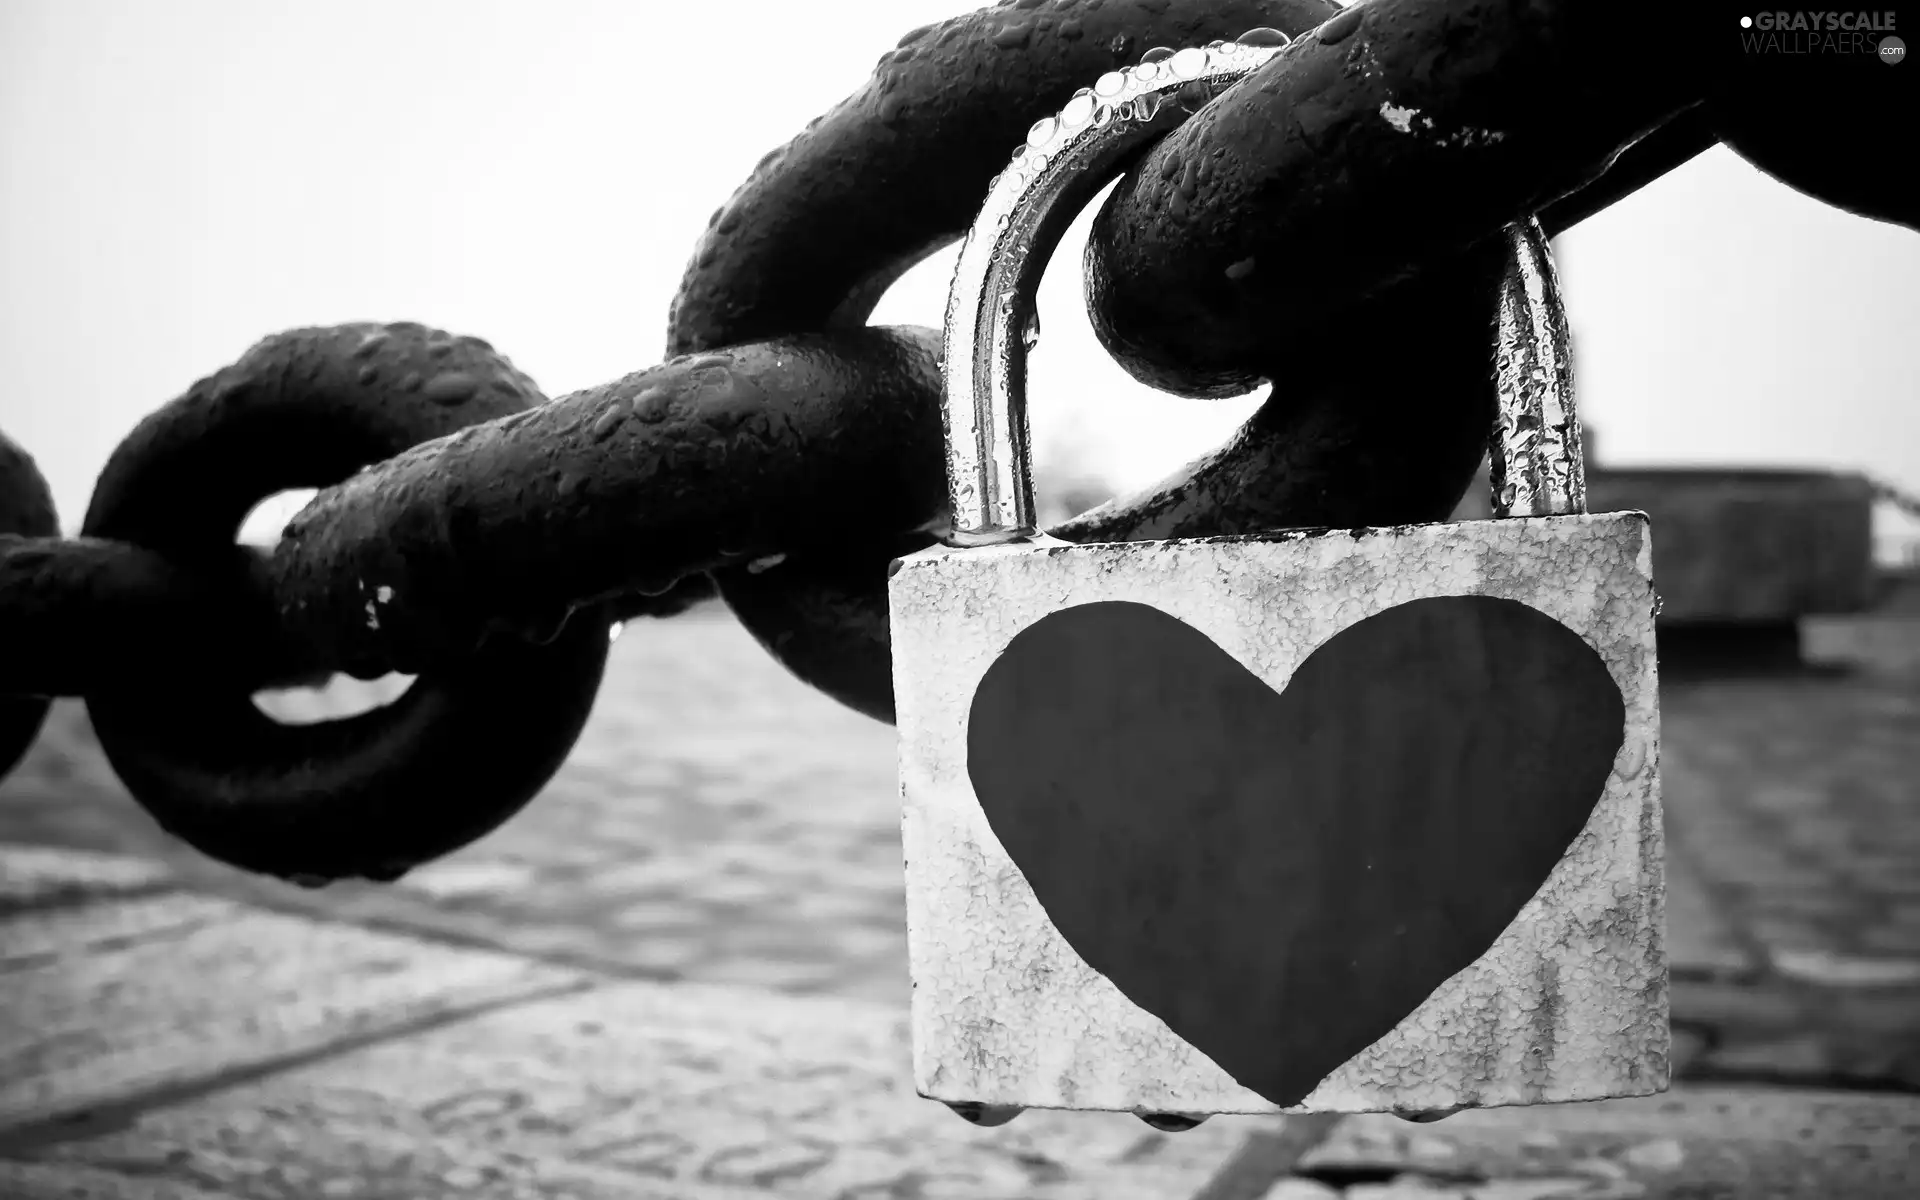 Heart, chain, padlock